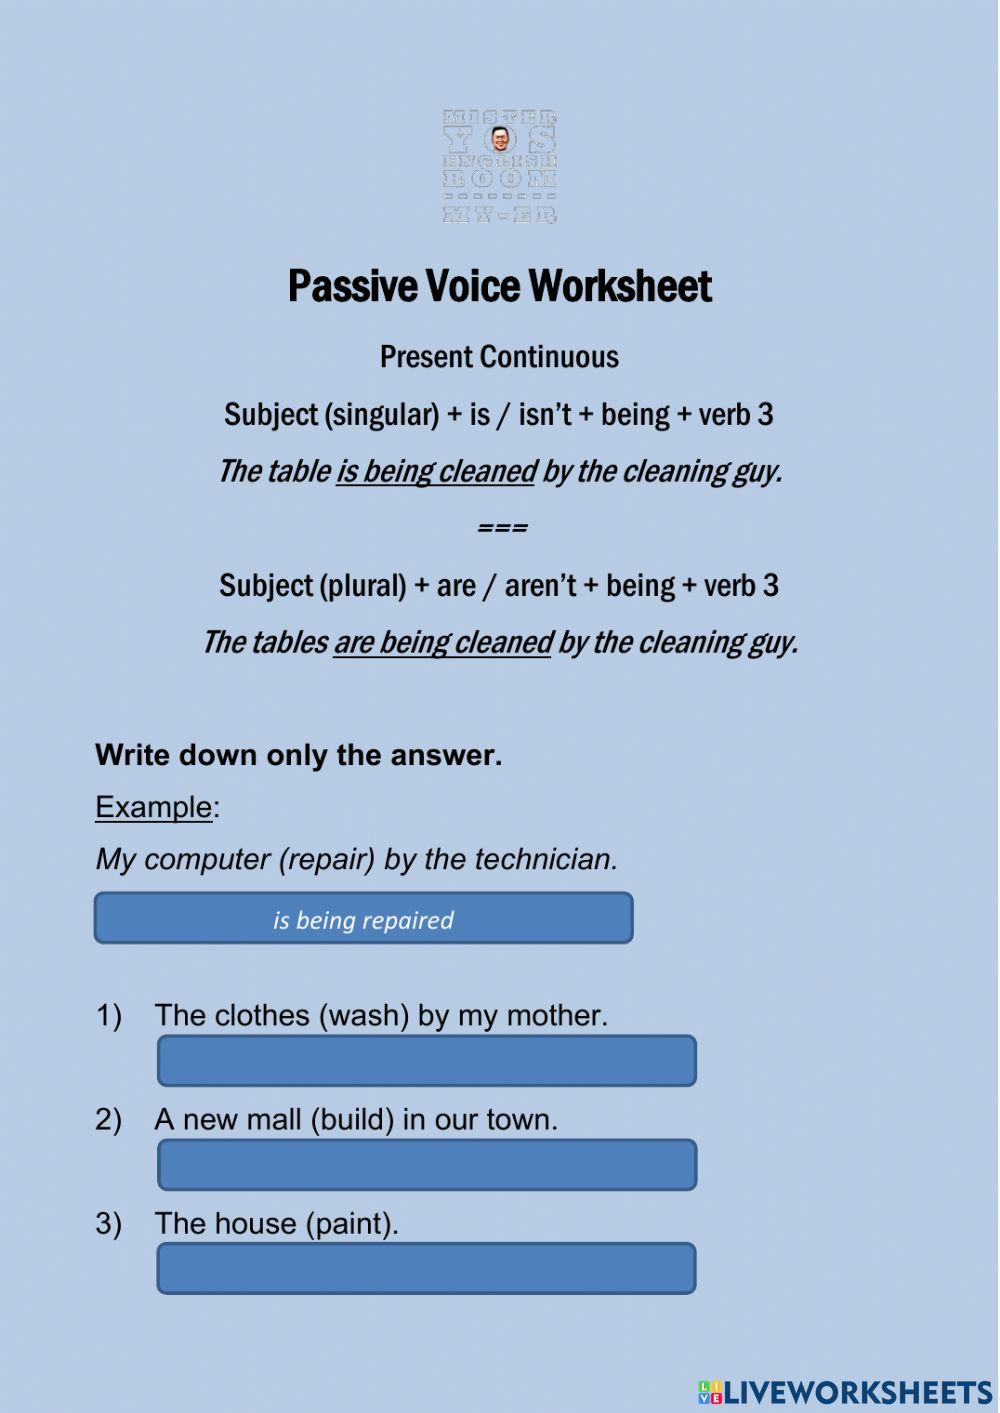 Passive Voice Worksheet